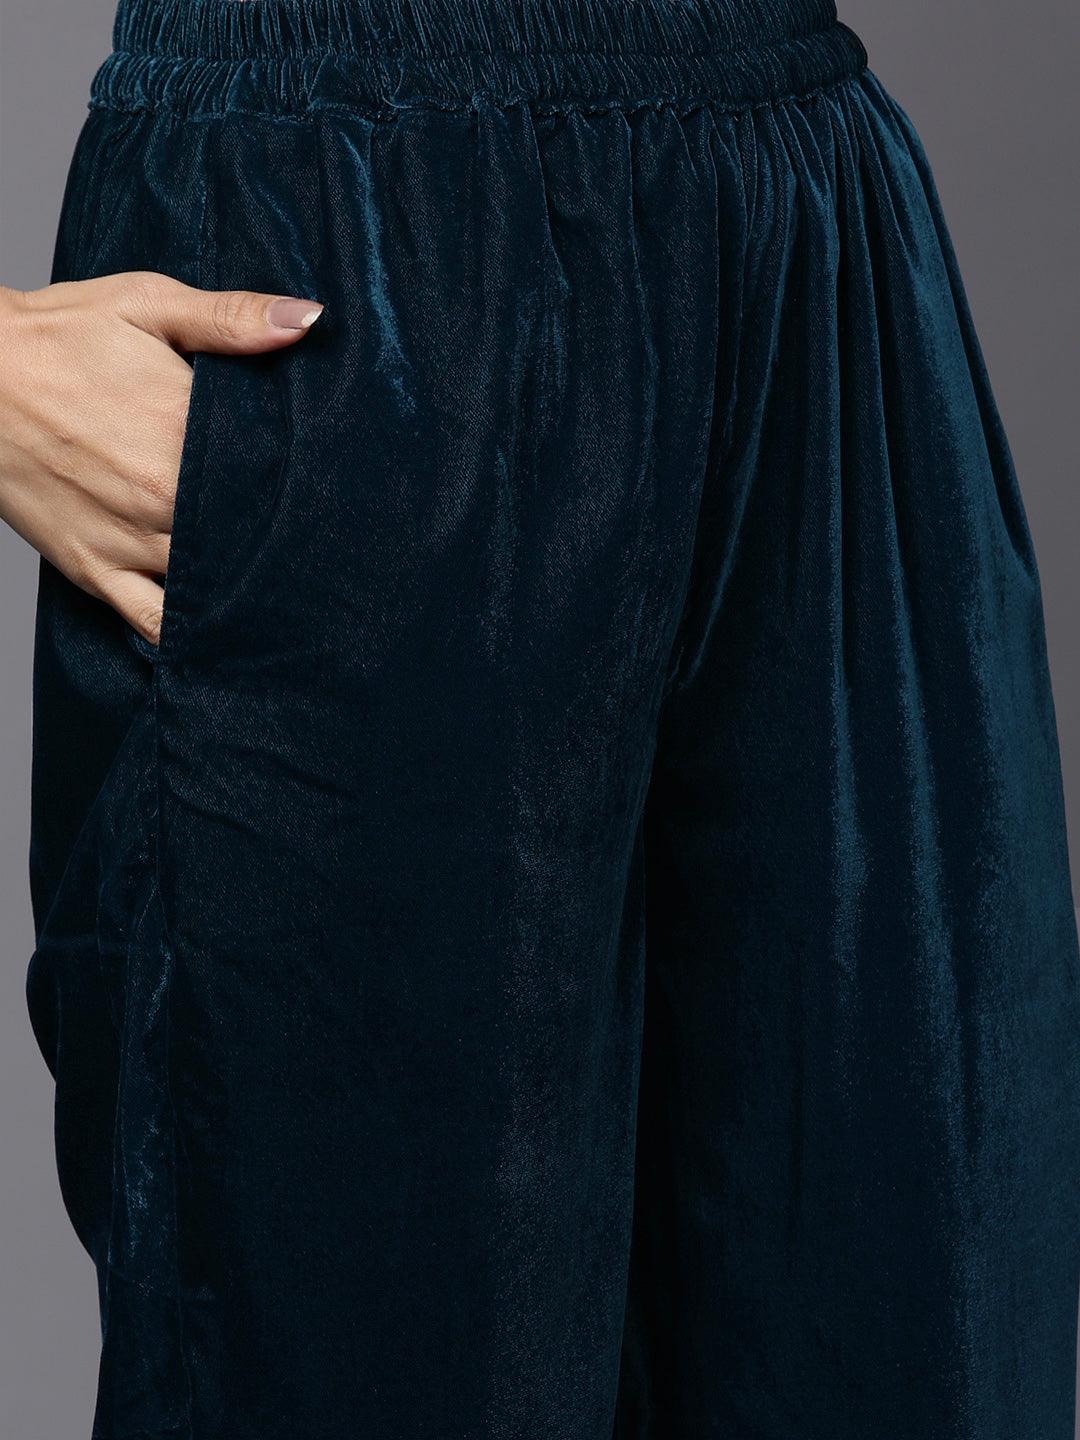 Teal Embroidered Velvet Straight Suit Set - Libas